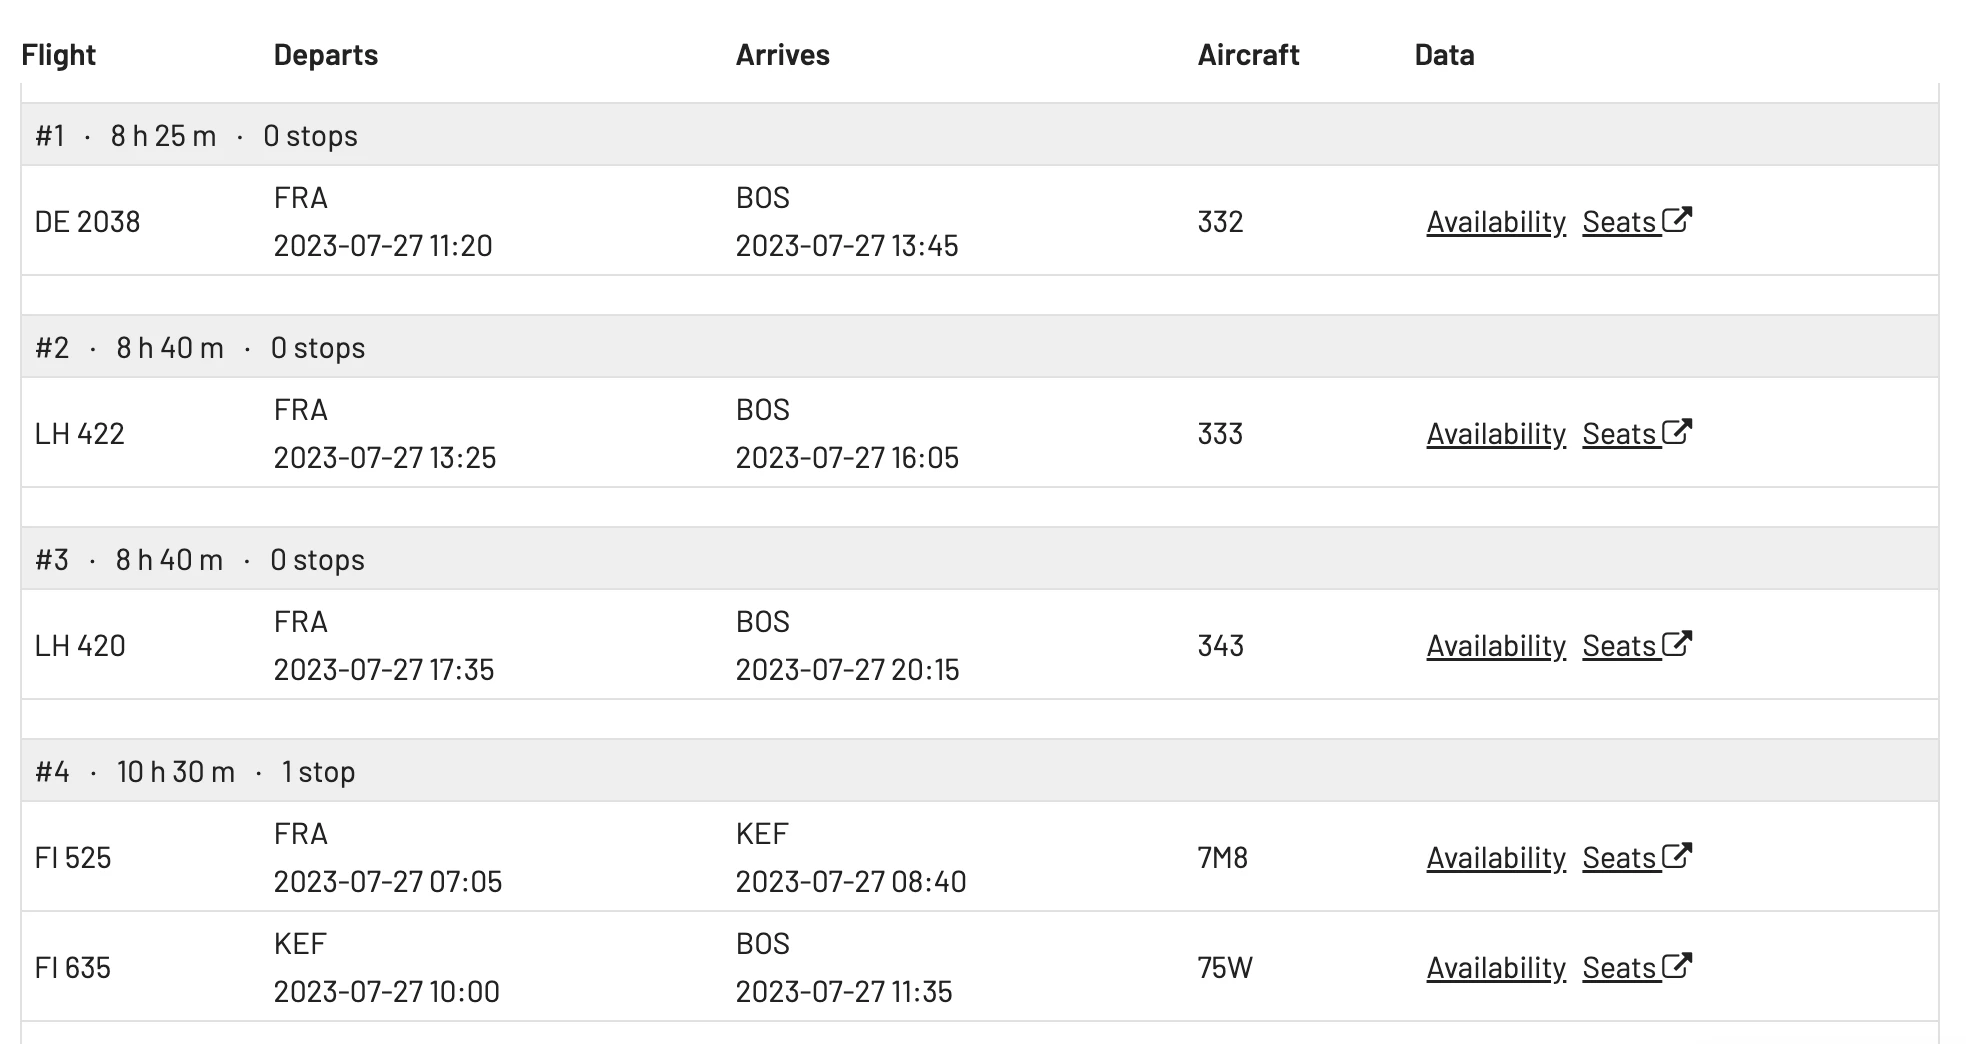 AwardFares Flight Schedules Results.